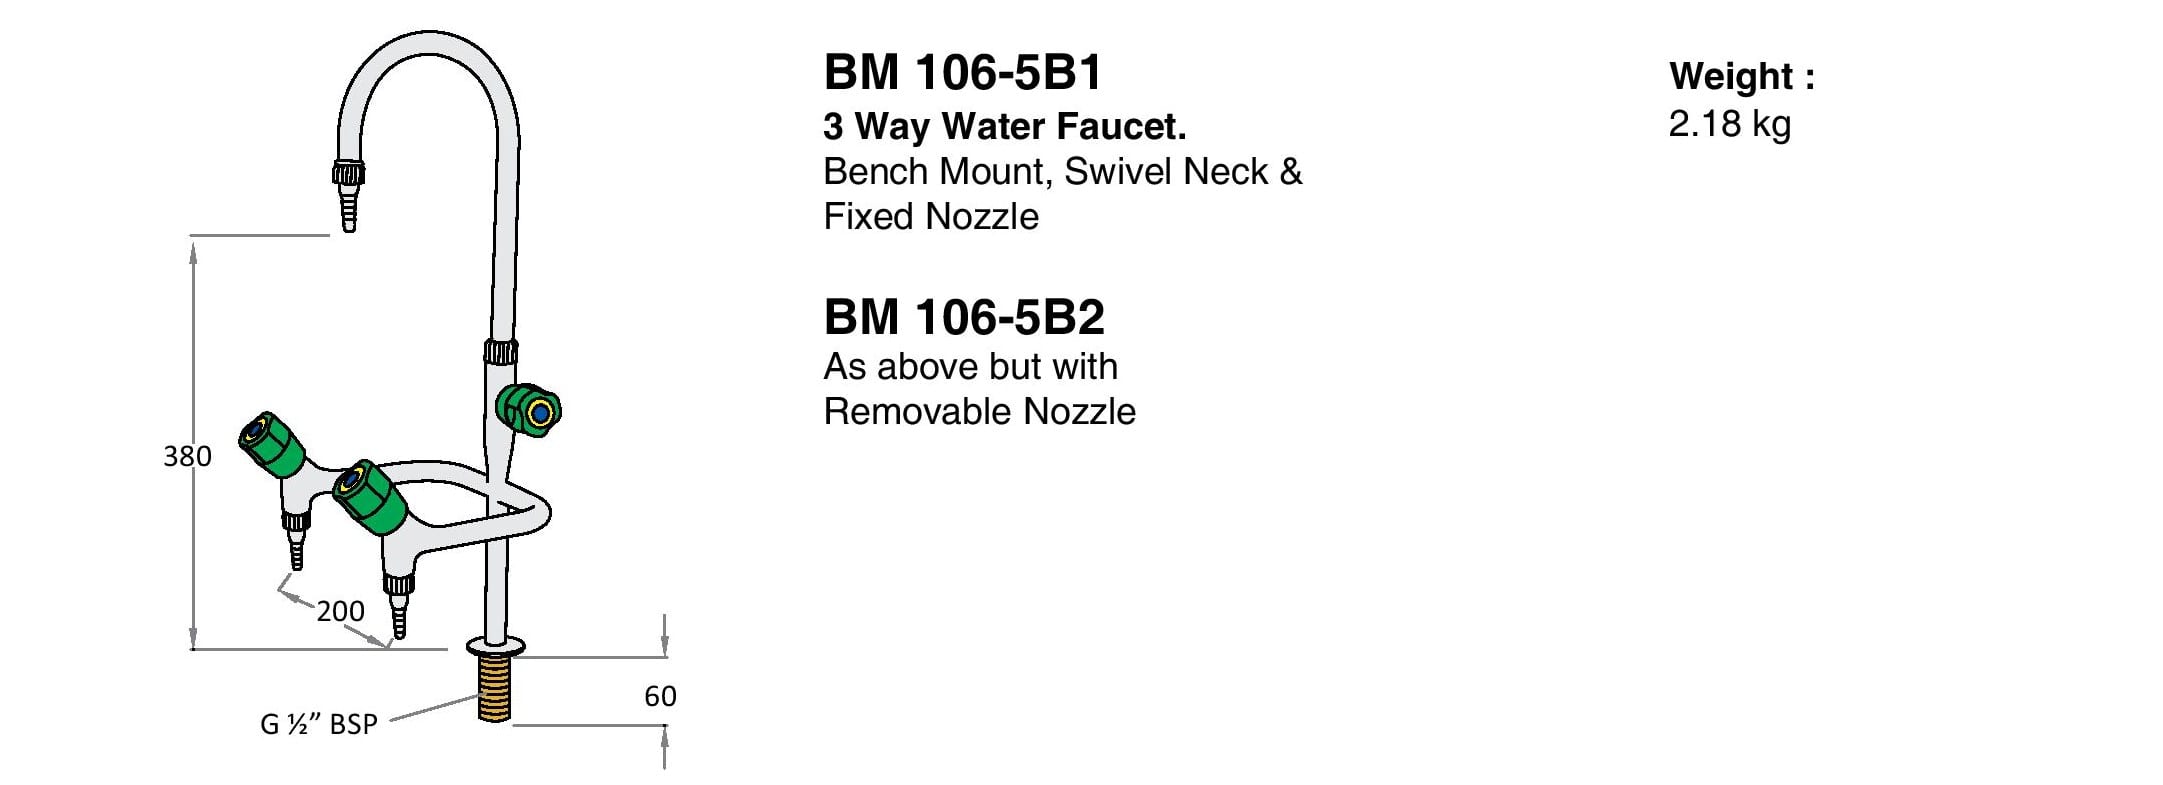 3 Way Water Faucet BM106-5B1 Drawing Description